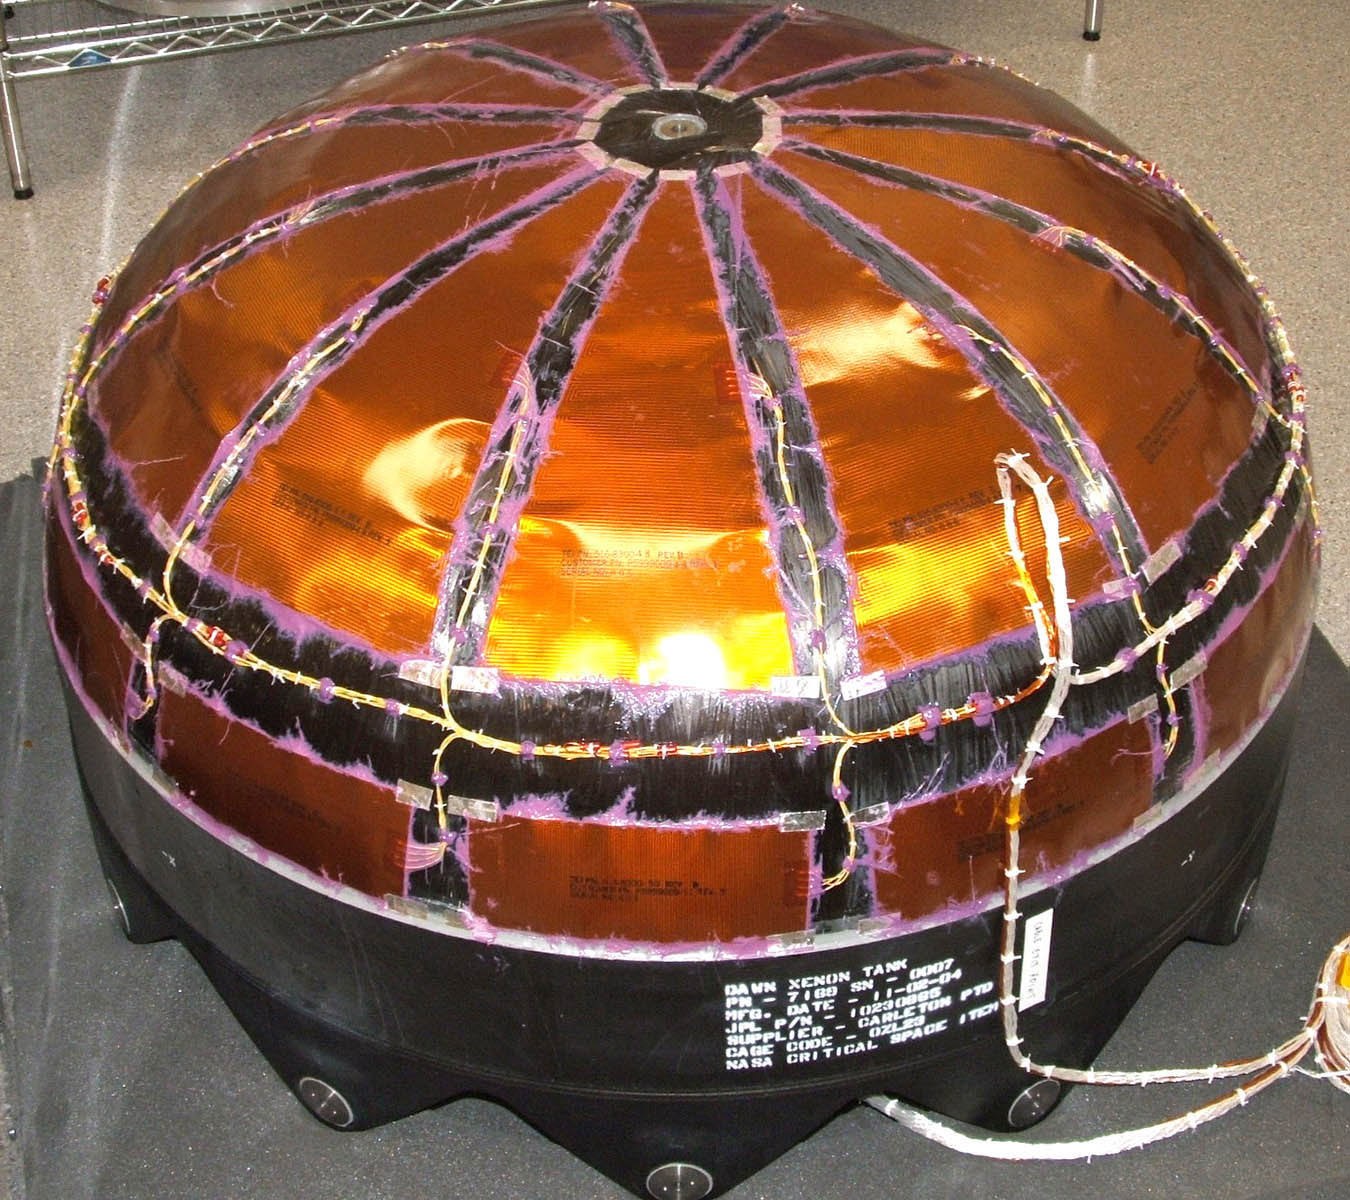 Xenon tank of the Dawn probe